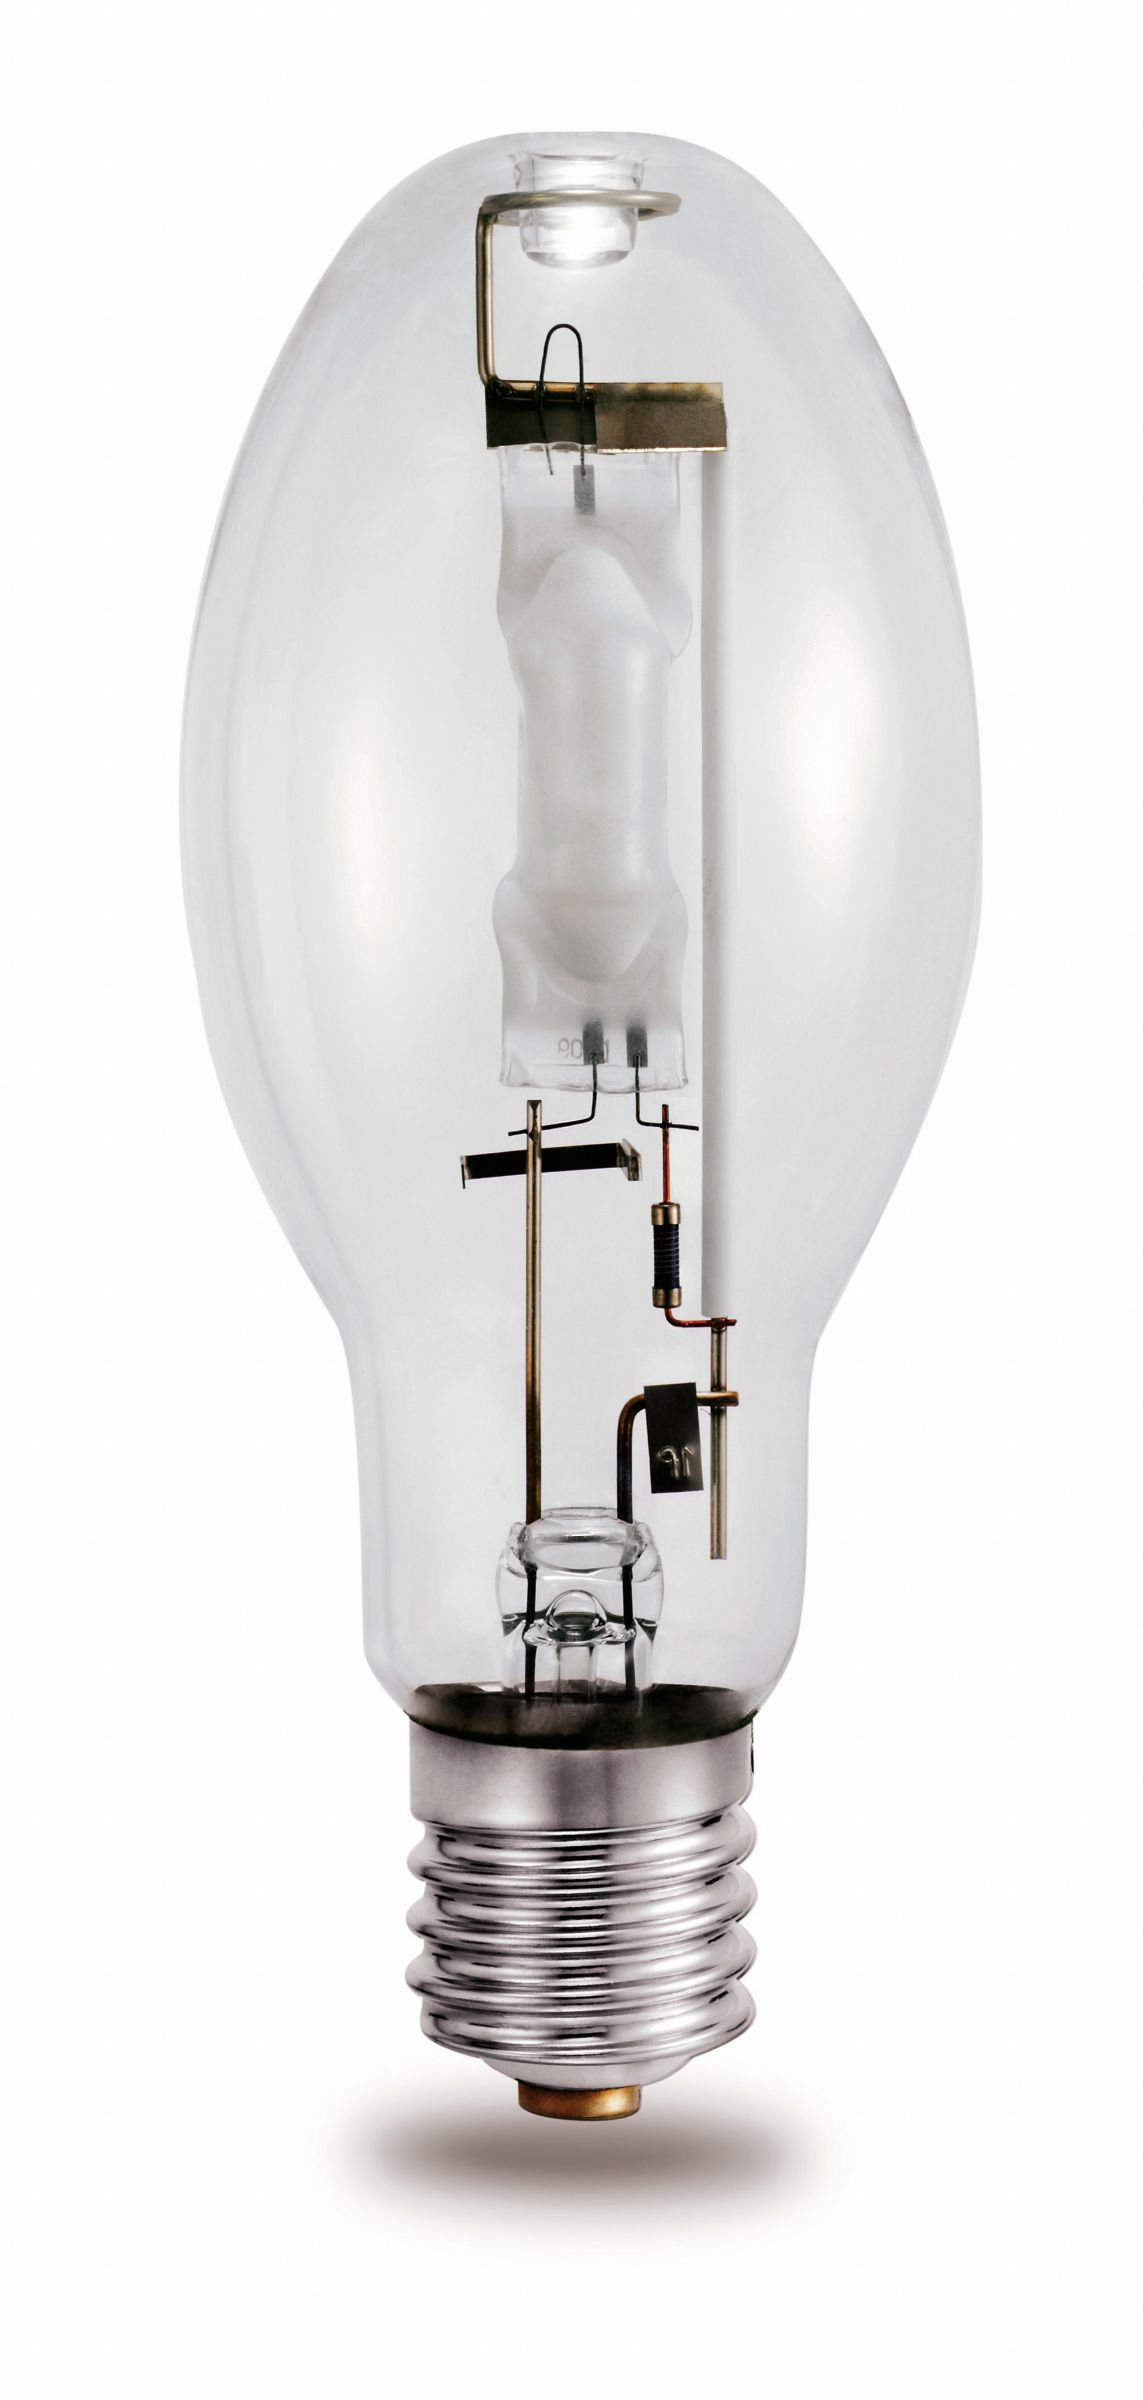 Plusrite 2410 MHDE250/UVS/14K 250W Metal Halide Light Bulb 